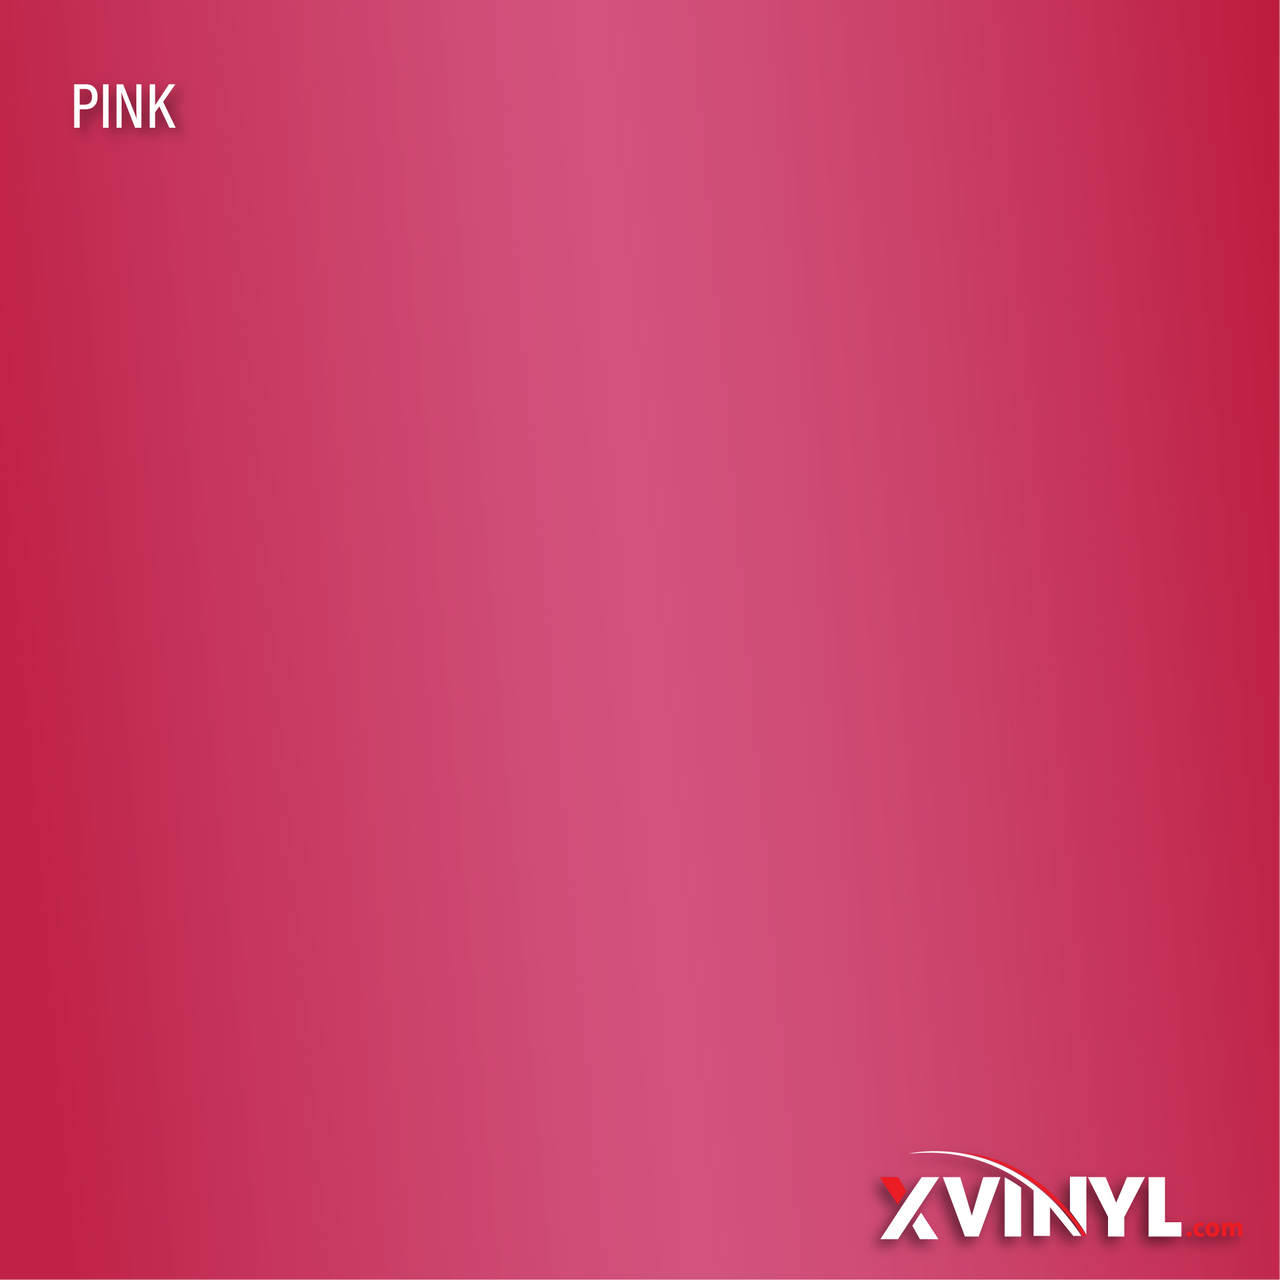 Pink HTV